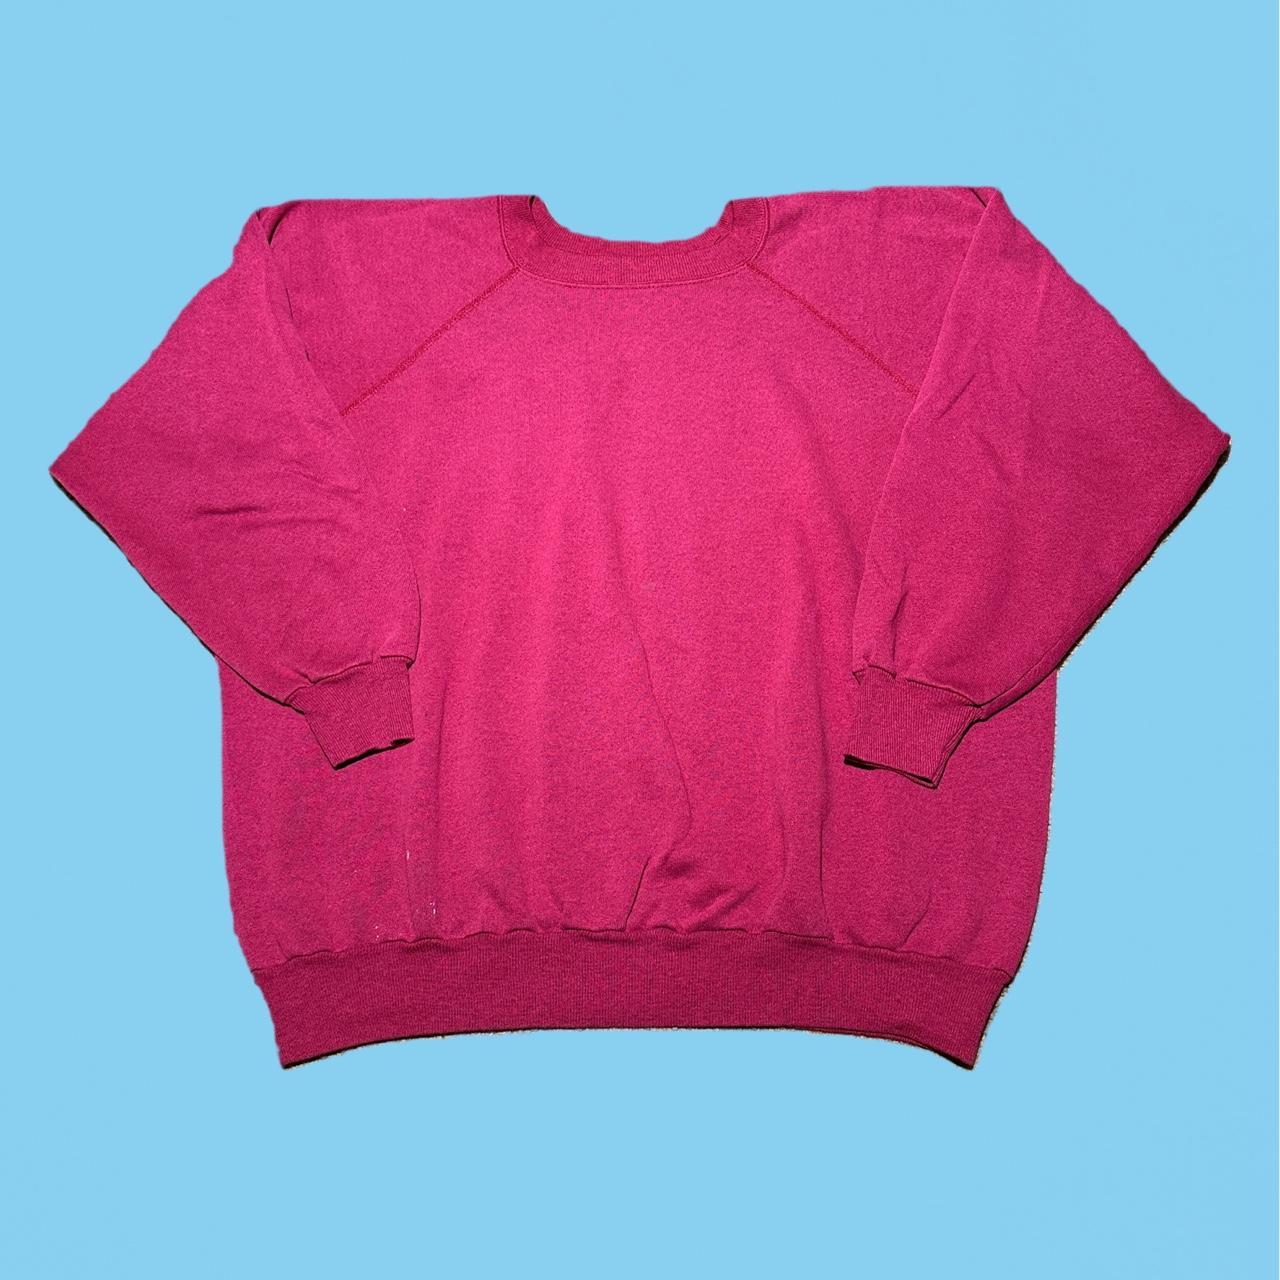 The Vintage Varsity Big Red Crewneck Sweatshirt